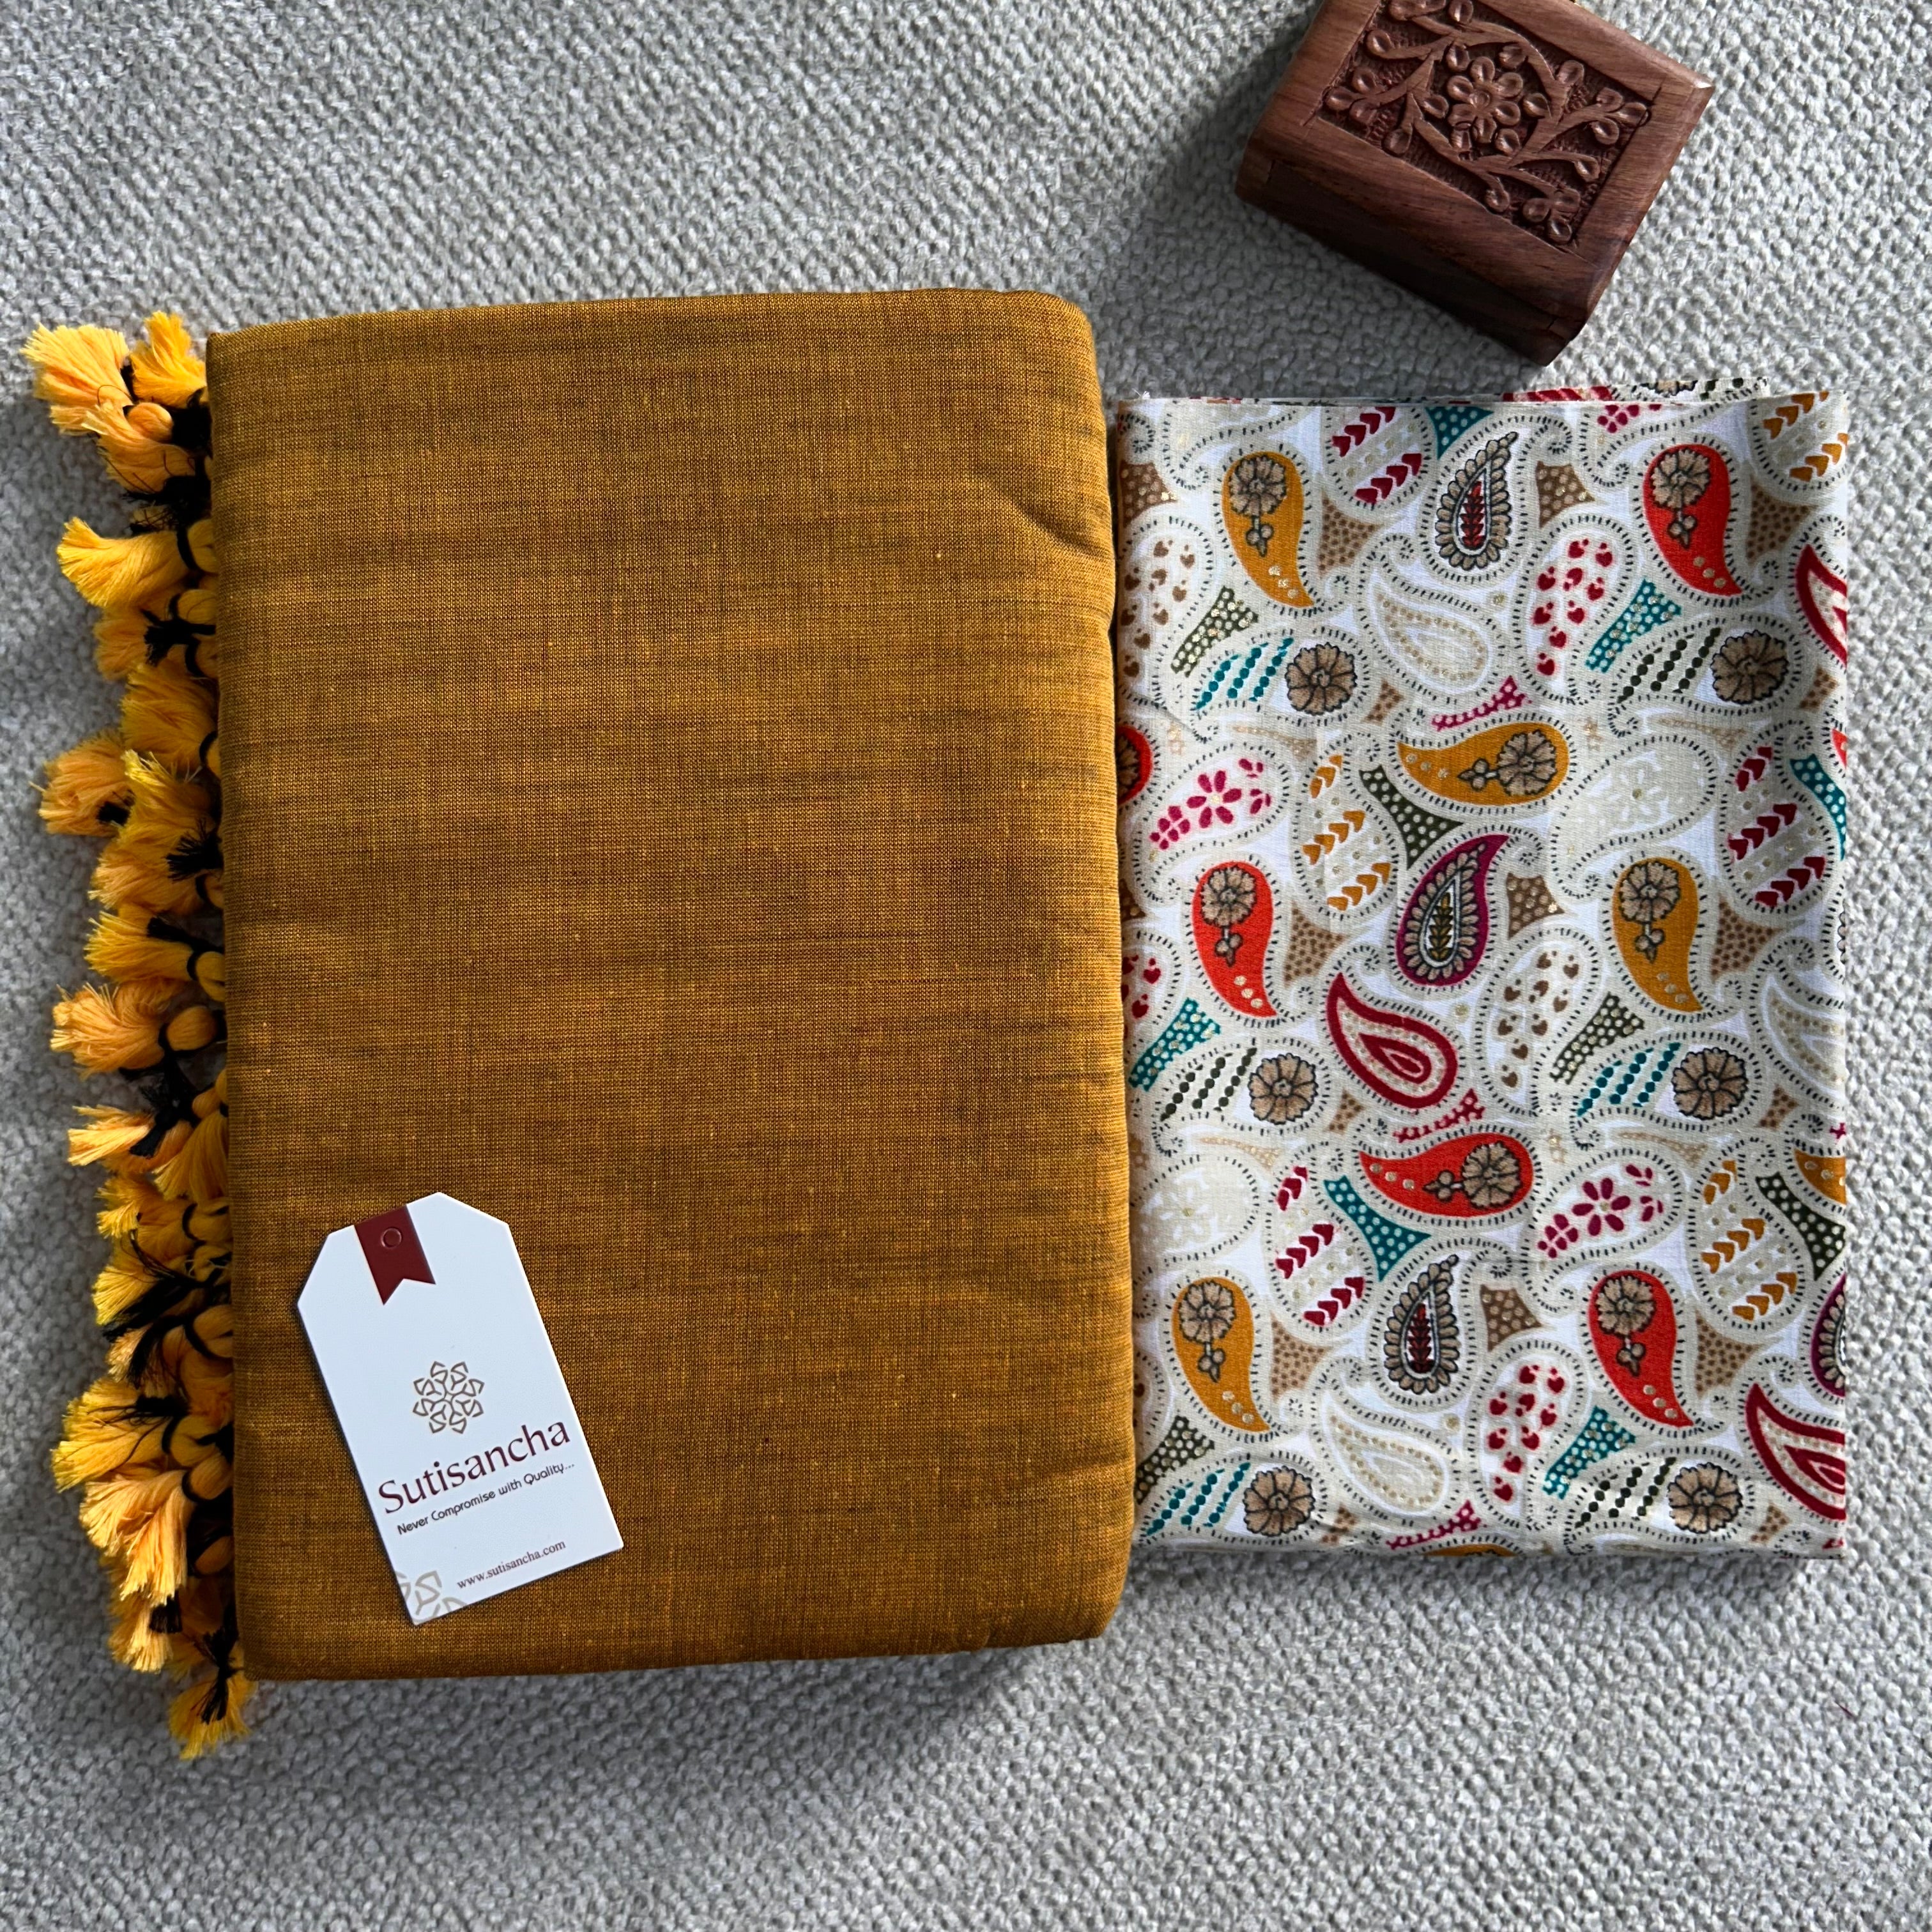 Sutisancha Mustard Handloom Cotton Saree With Designer Foil Printed Blouse